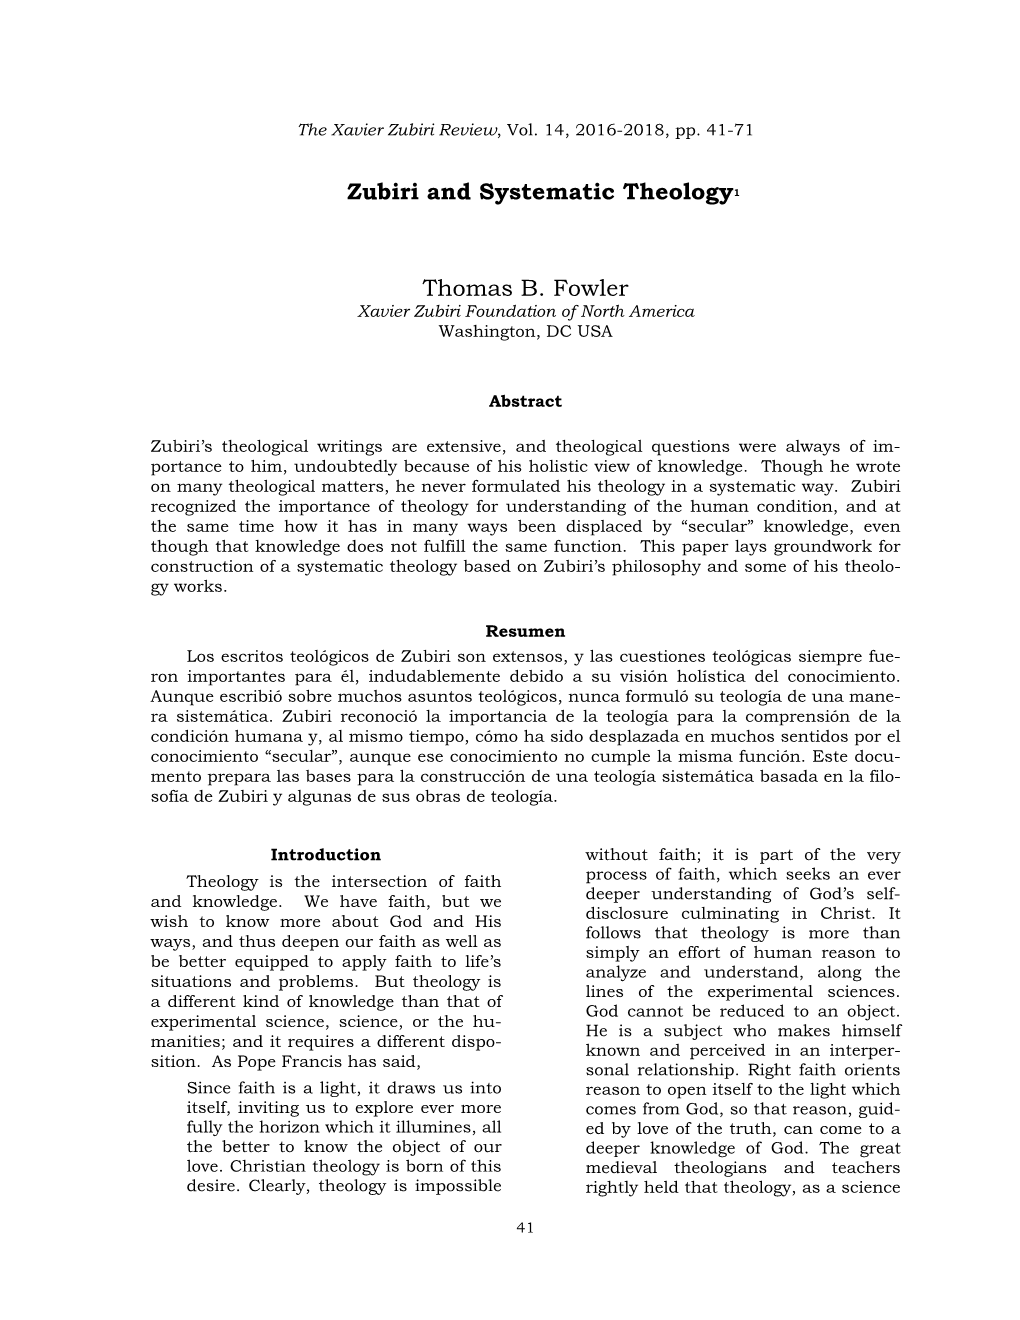 Zubiri and Systematic Theology1 Thomas B. Fowler